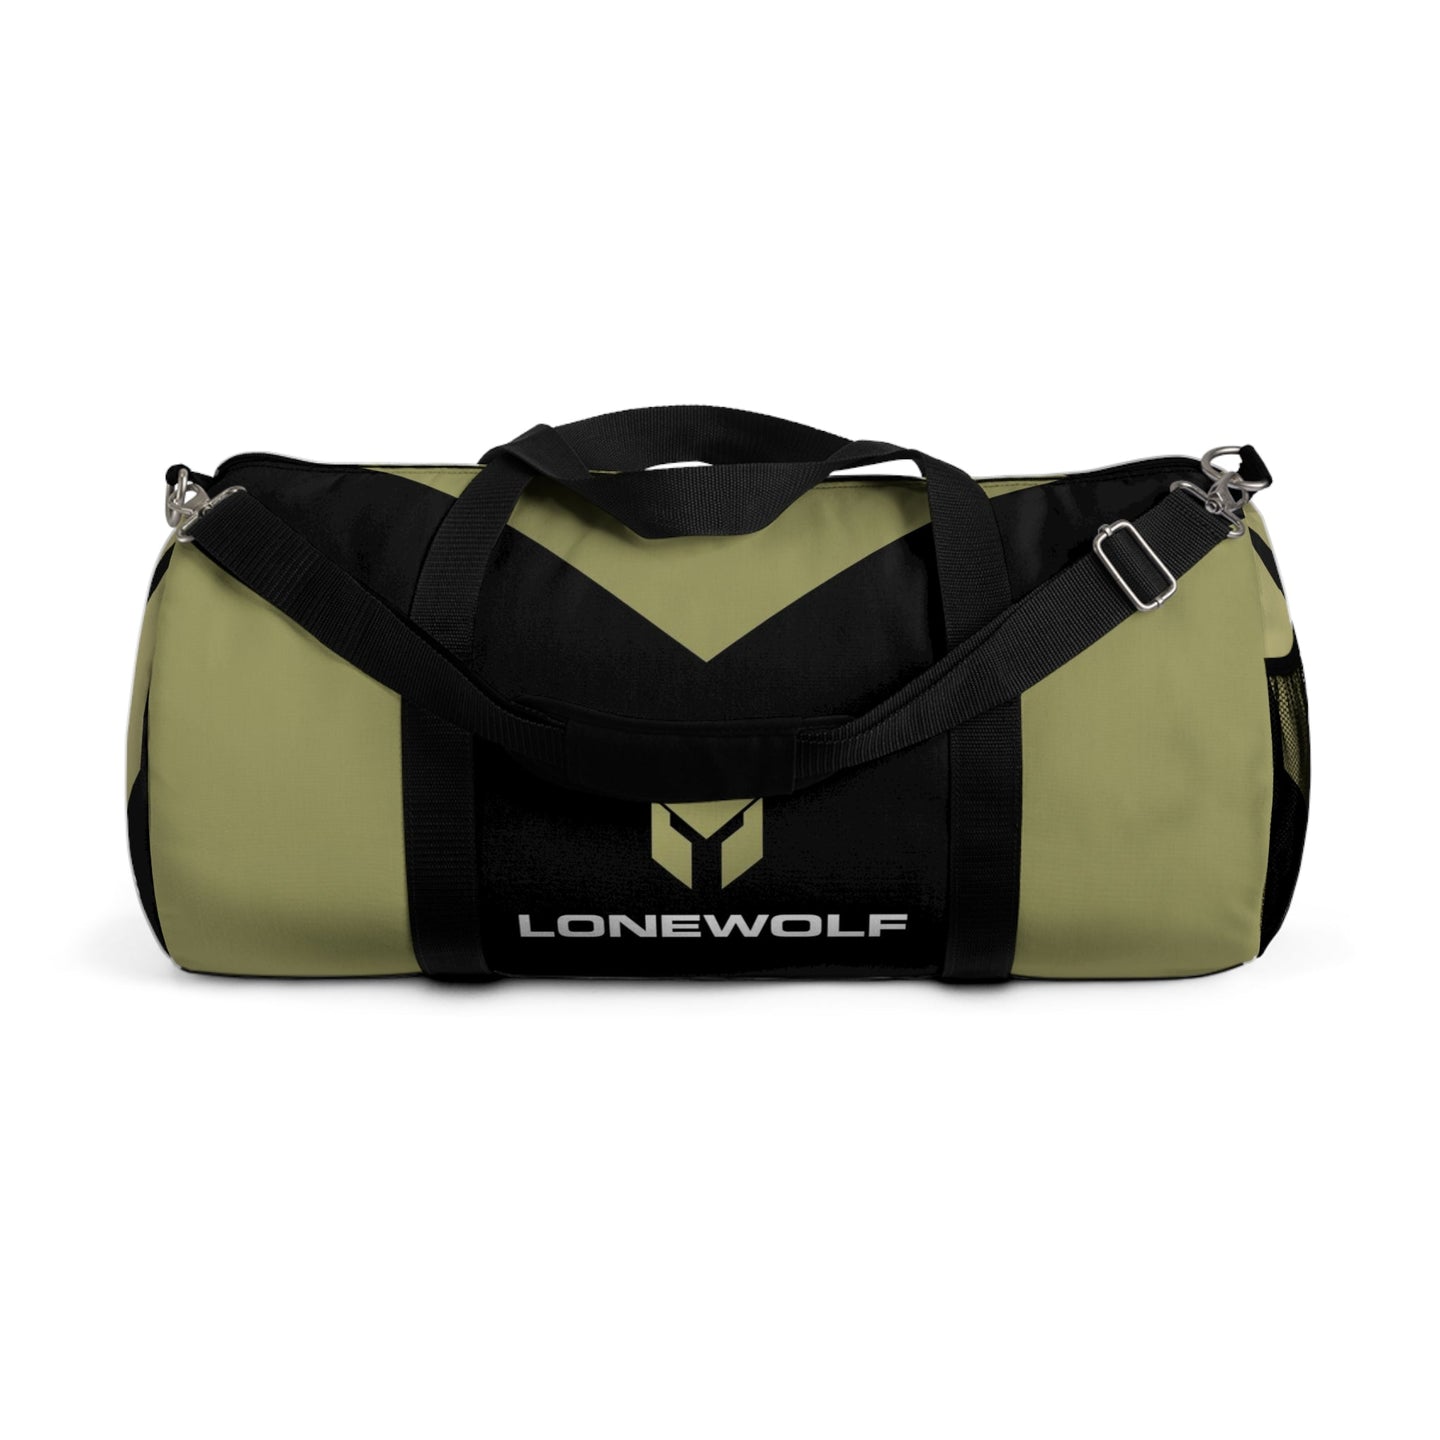 Lonewolf Duffel Gym Bag - THE LONEWOLF BRAND PTY LTD